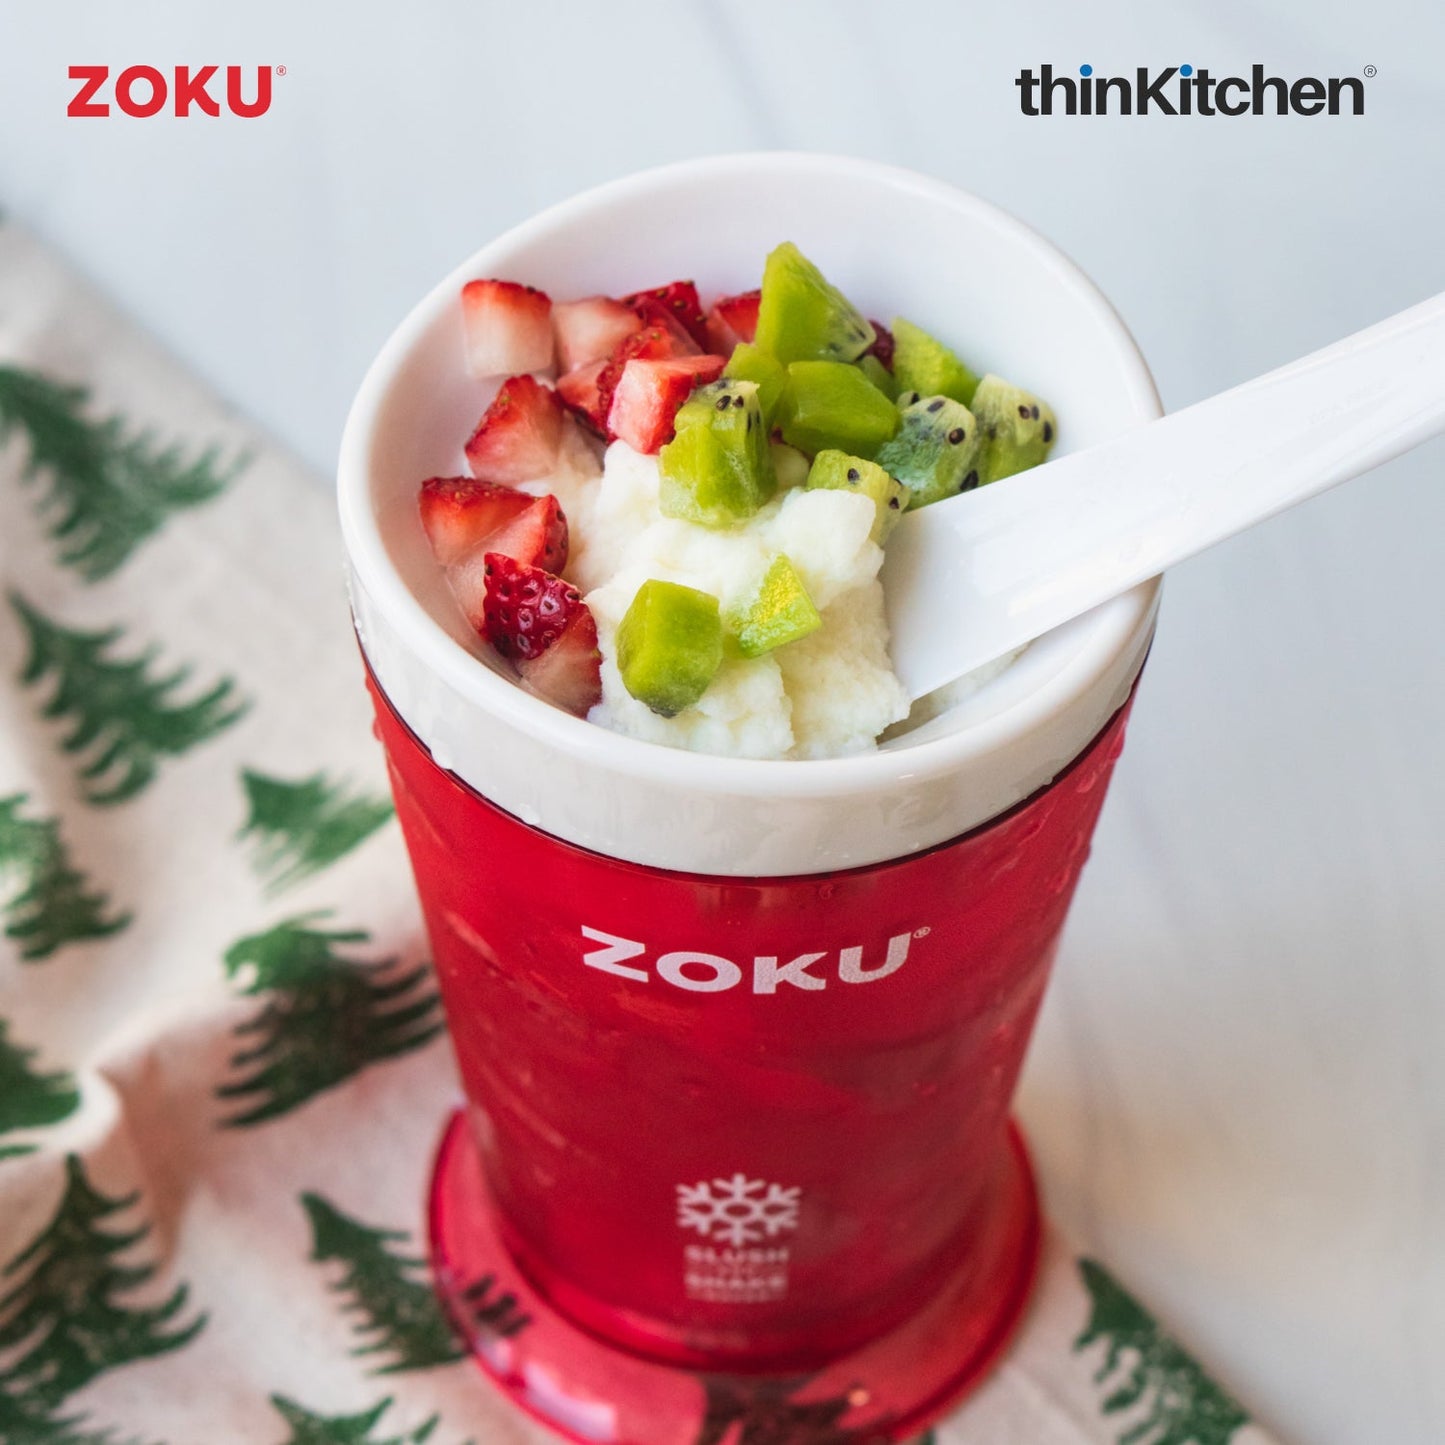 thinKitchen™ Zoku Red Slush/Shake Maker, 240ml